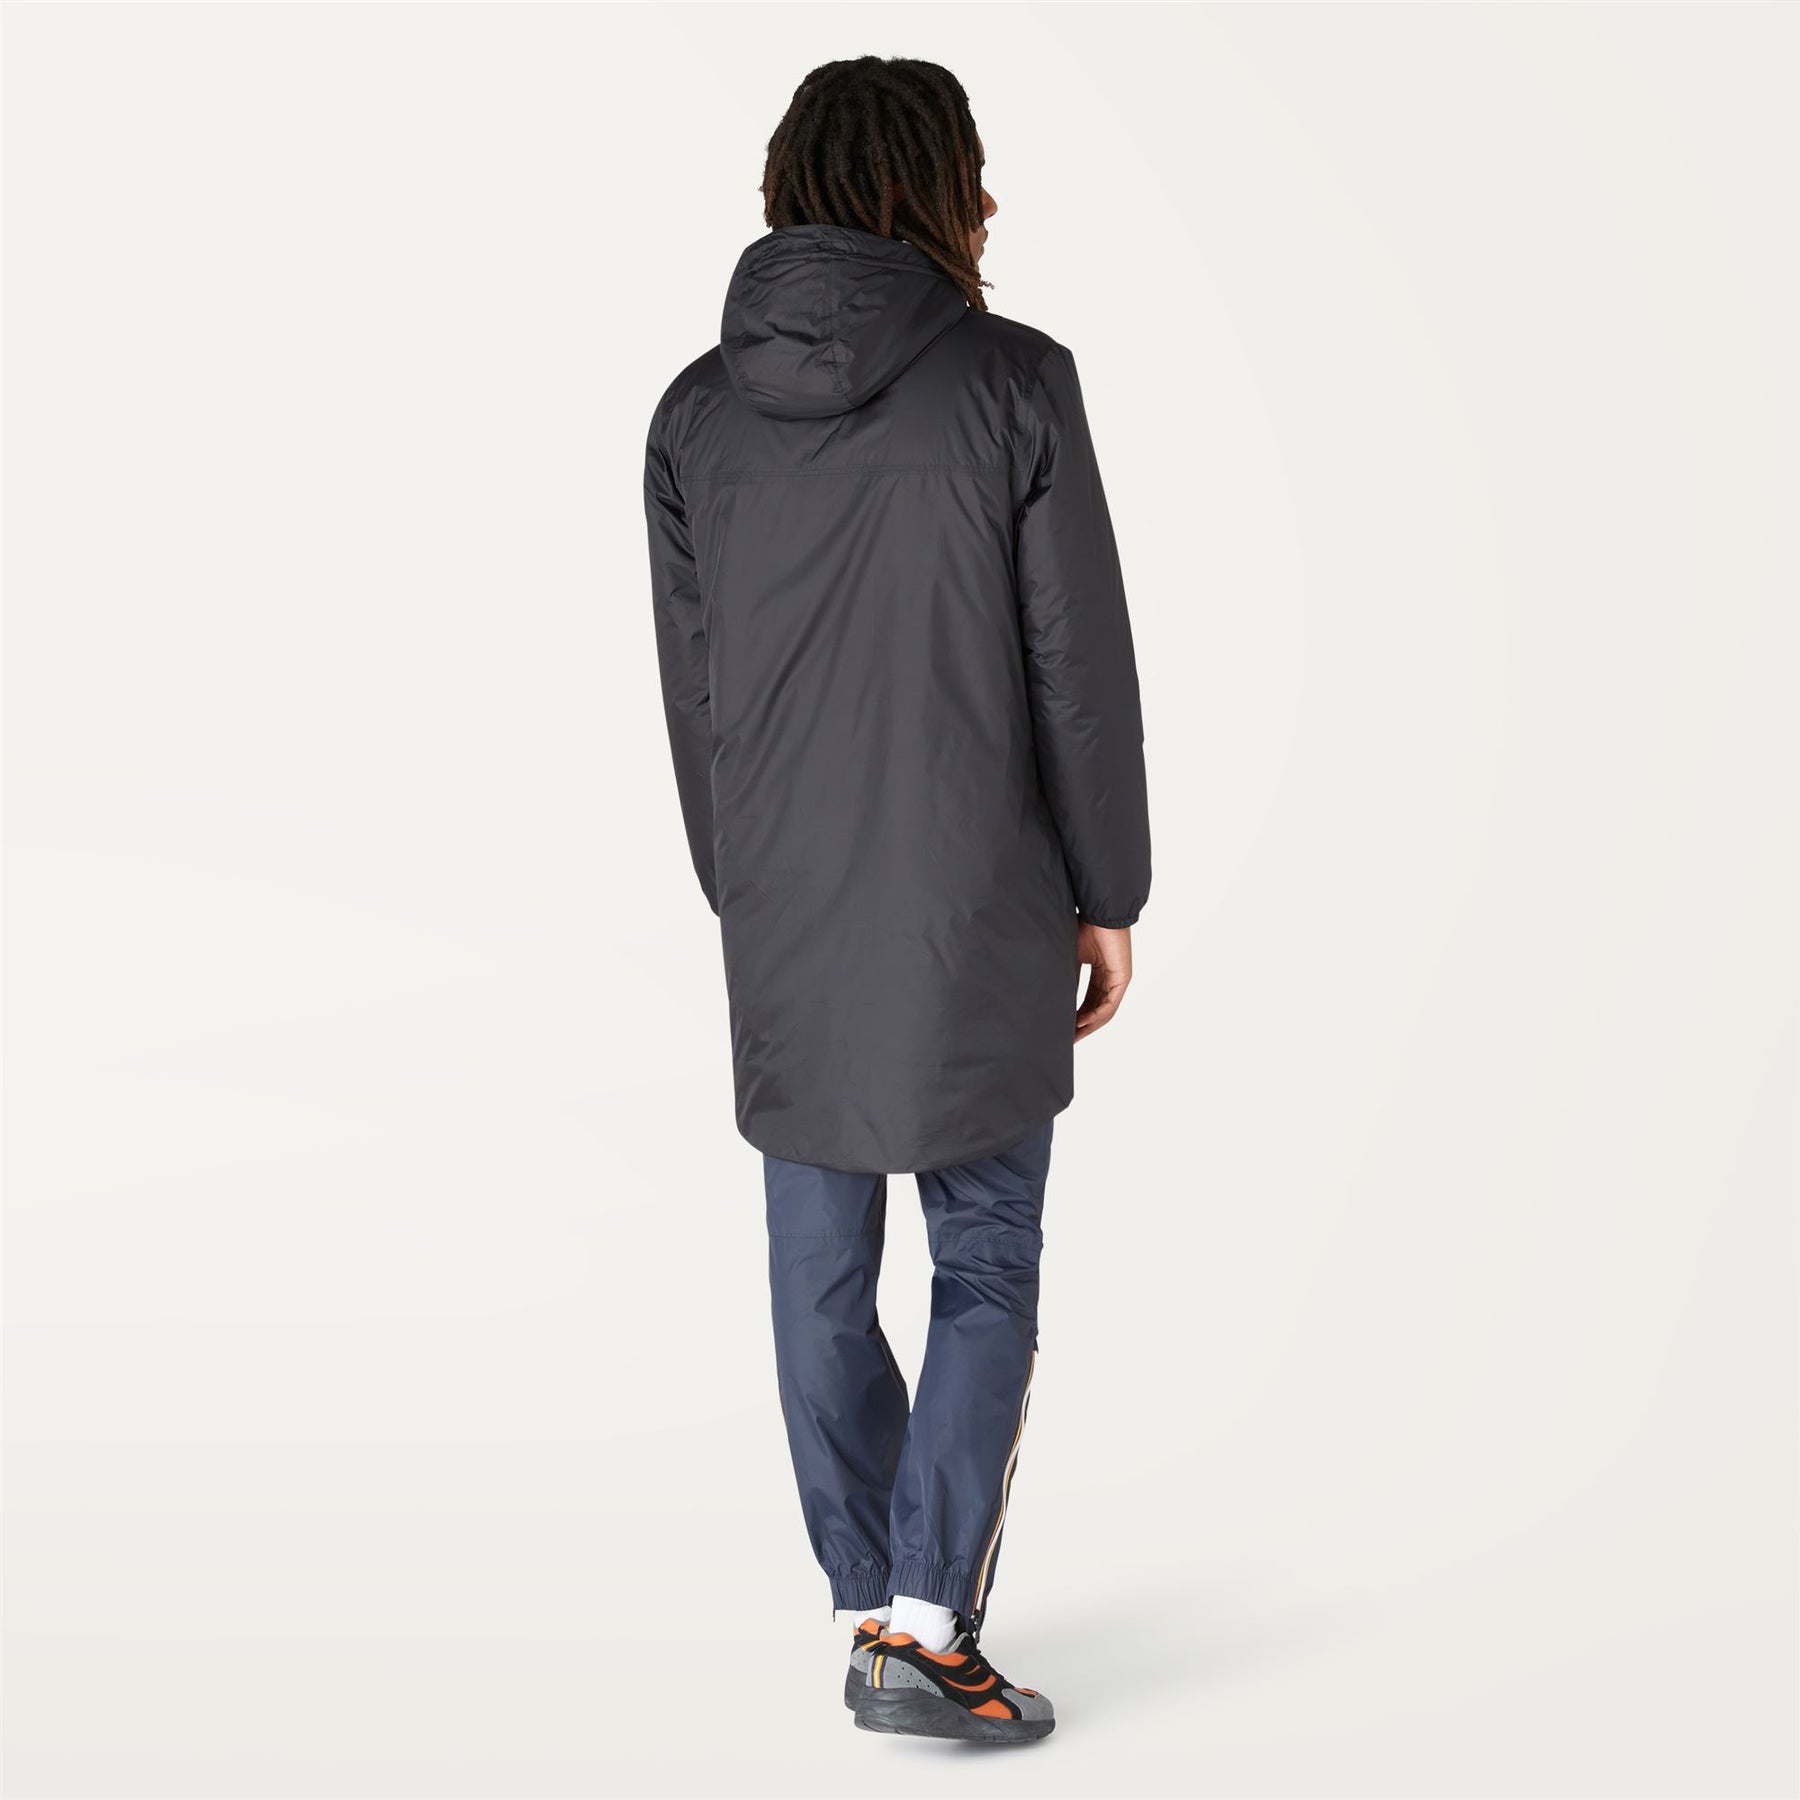 Eiffel Orsetto - Unisex Packable Lined Long Rain Jacket in Black Pure